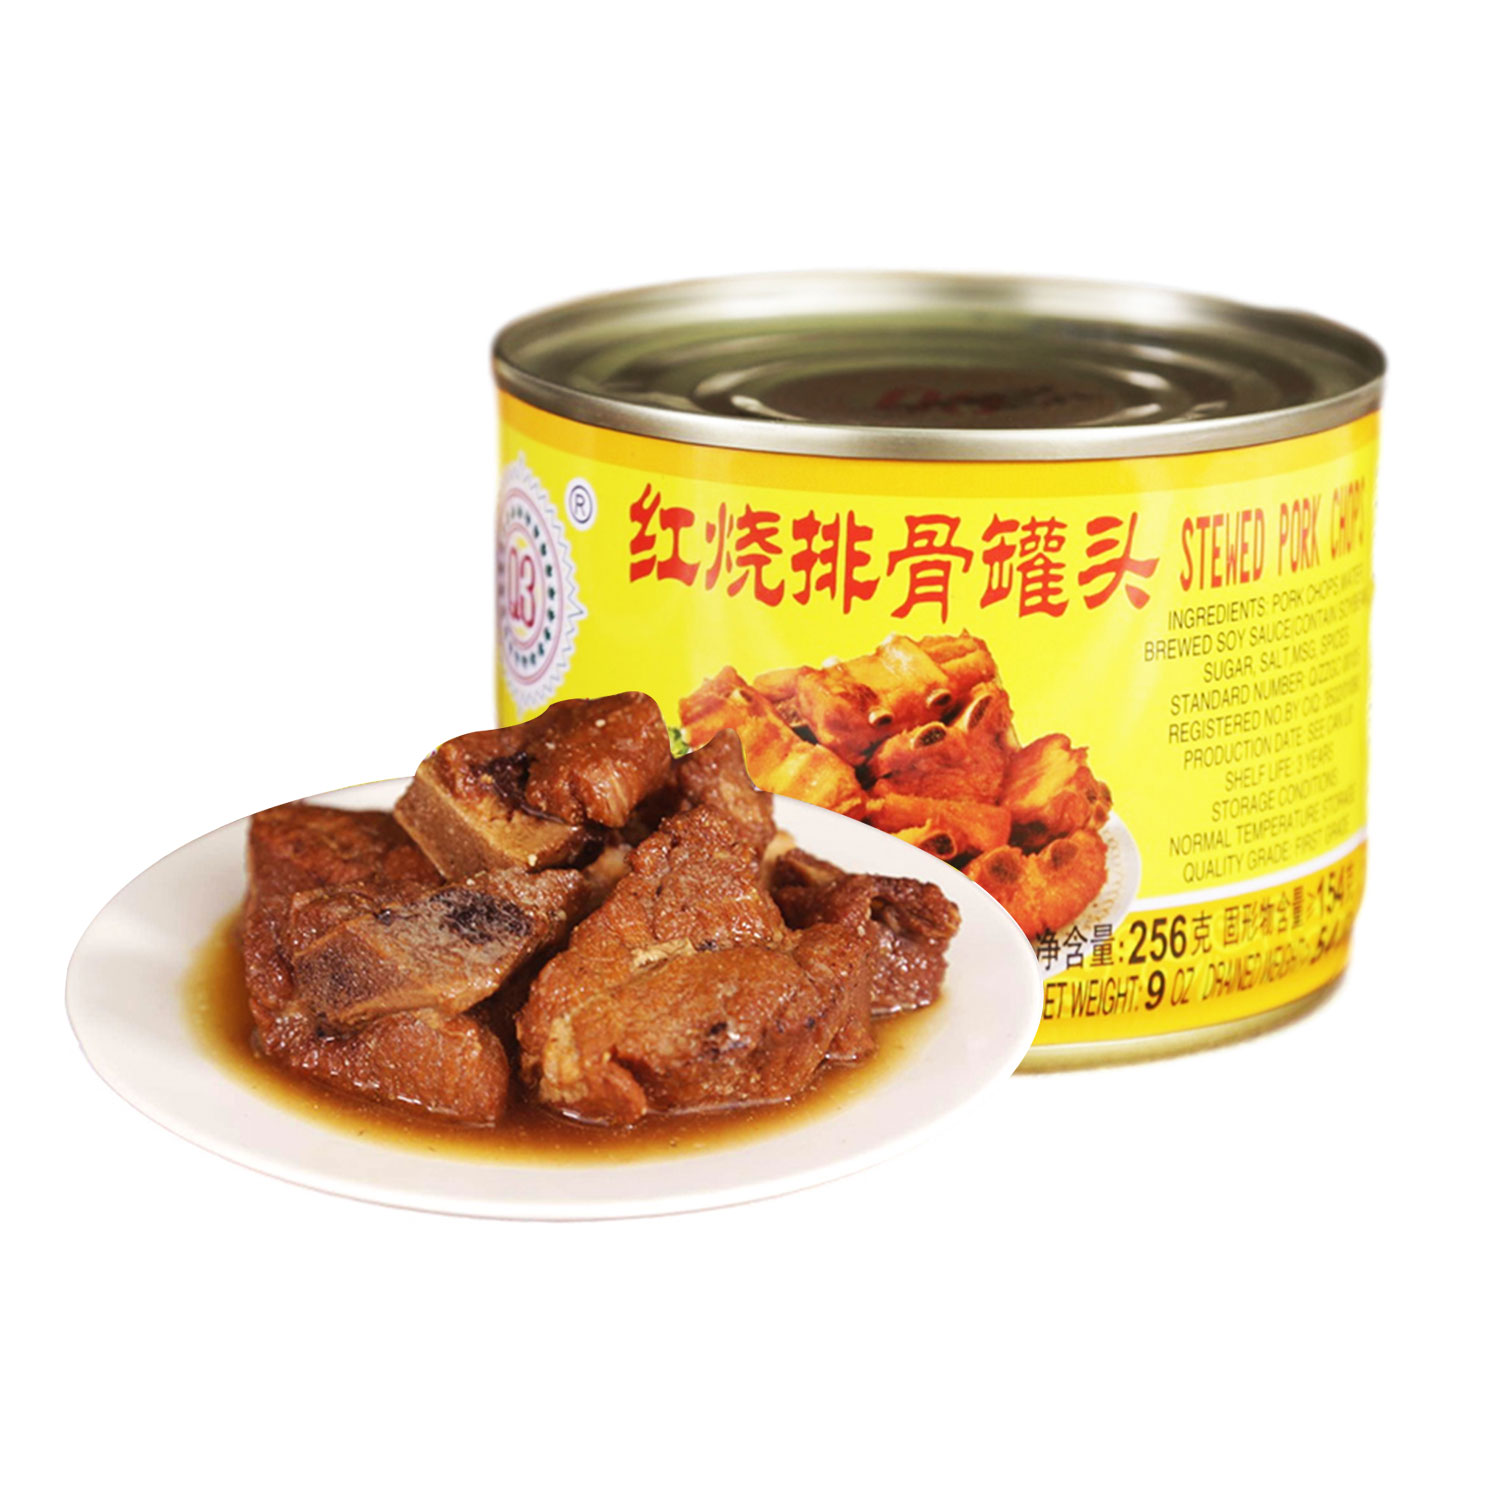 Q3 Stewed Pork Chops 397g-eBest-Condiments,Pantry